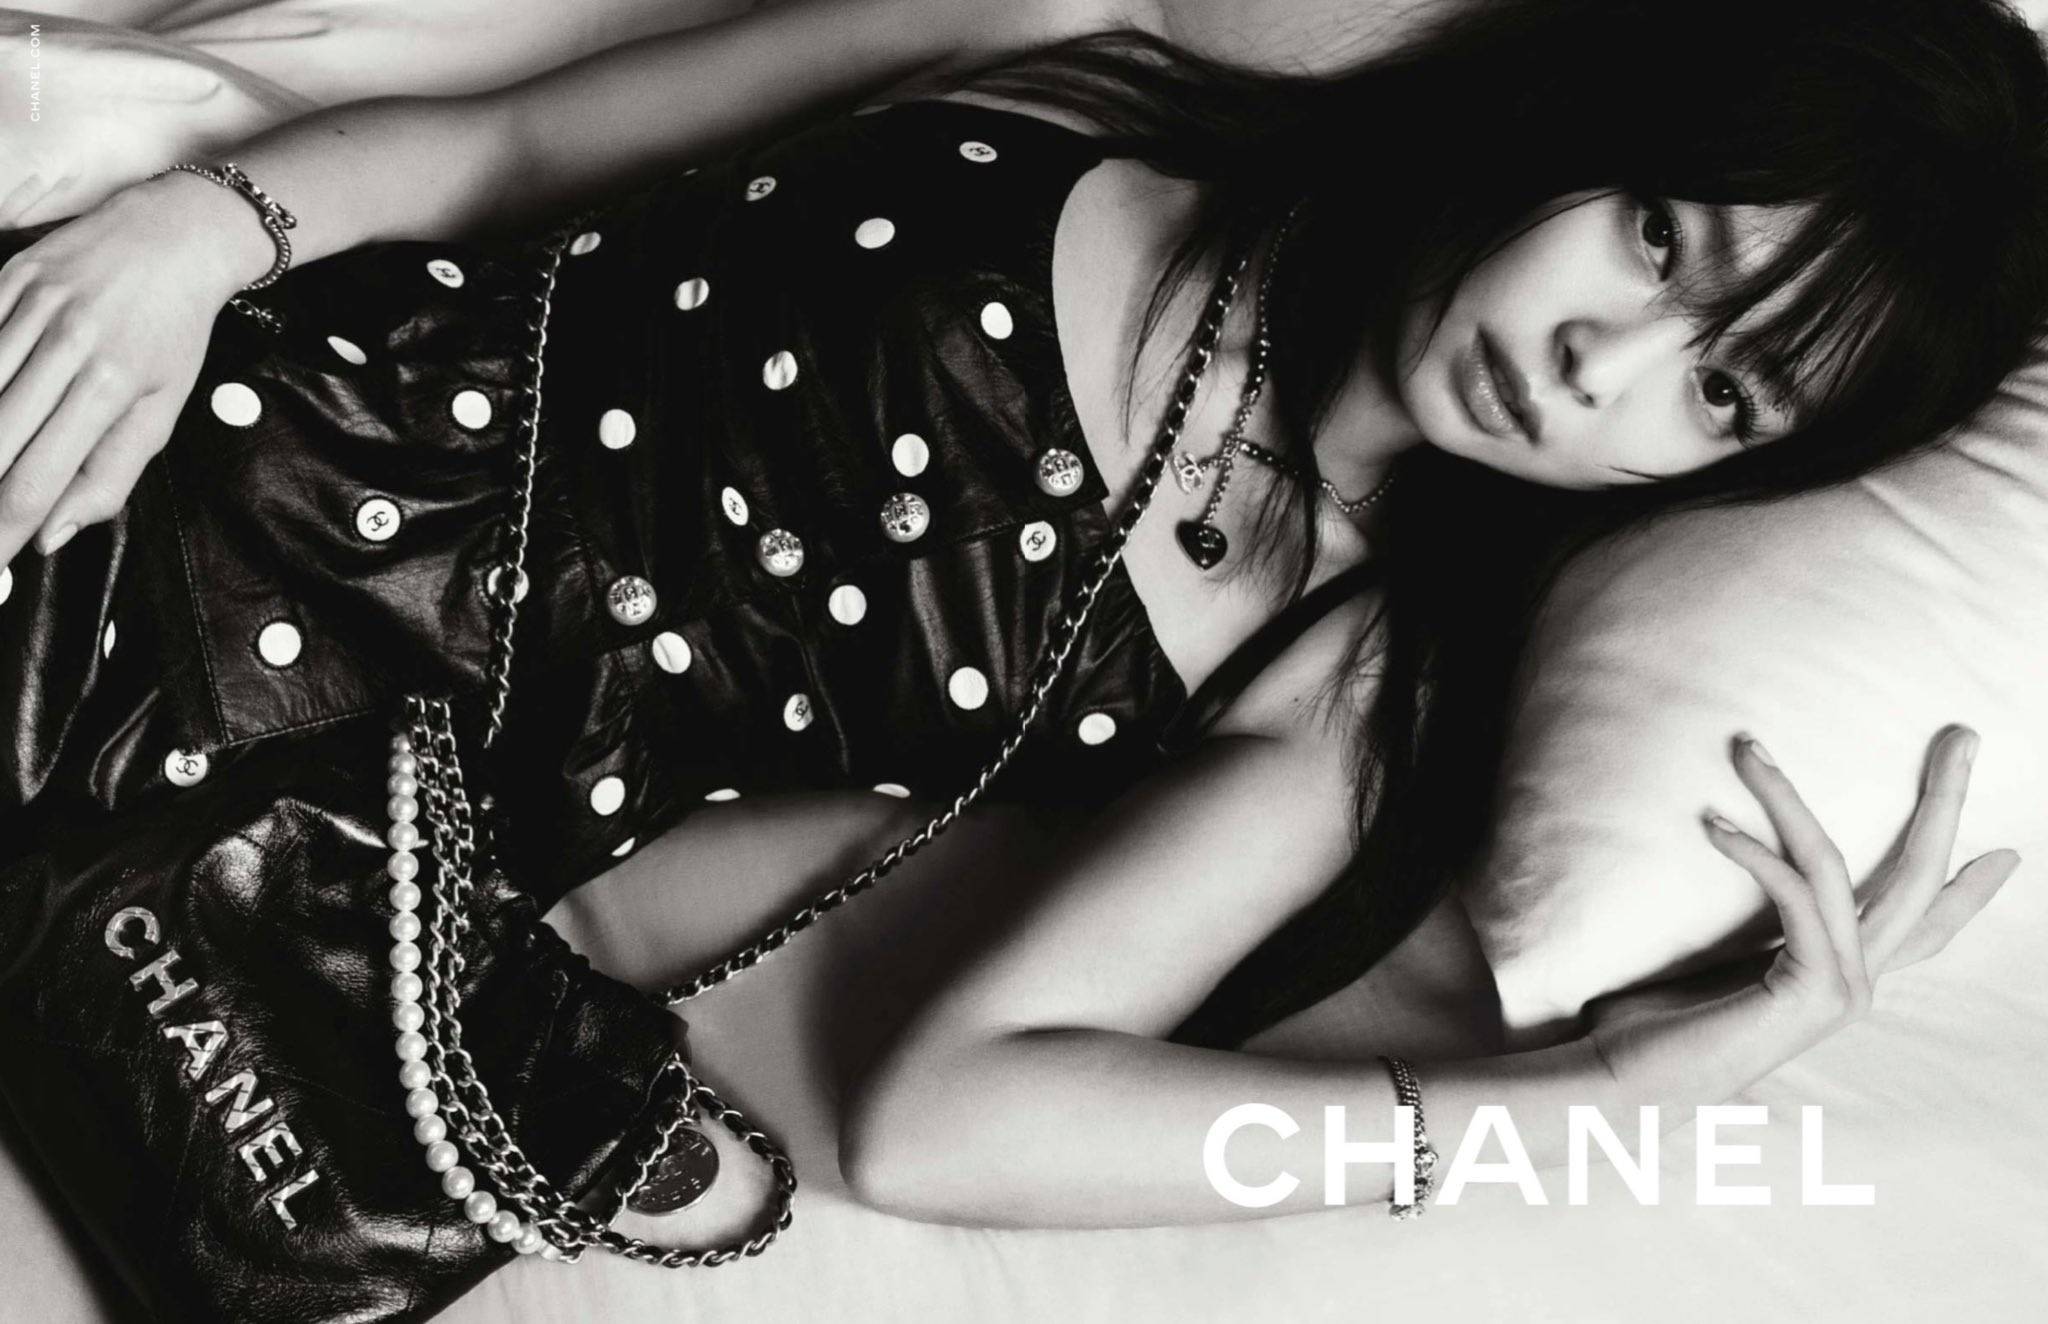 A peek at Jennie BLACKPINK's Chanel handbags collection